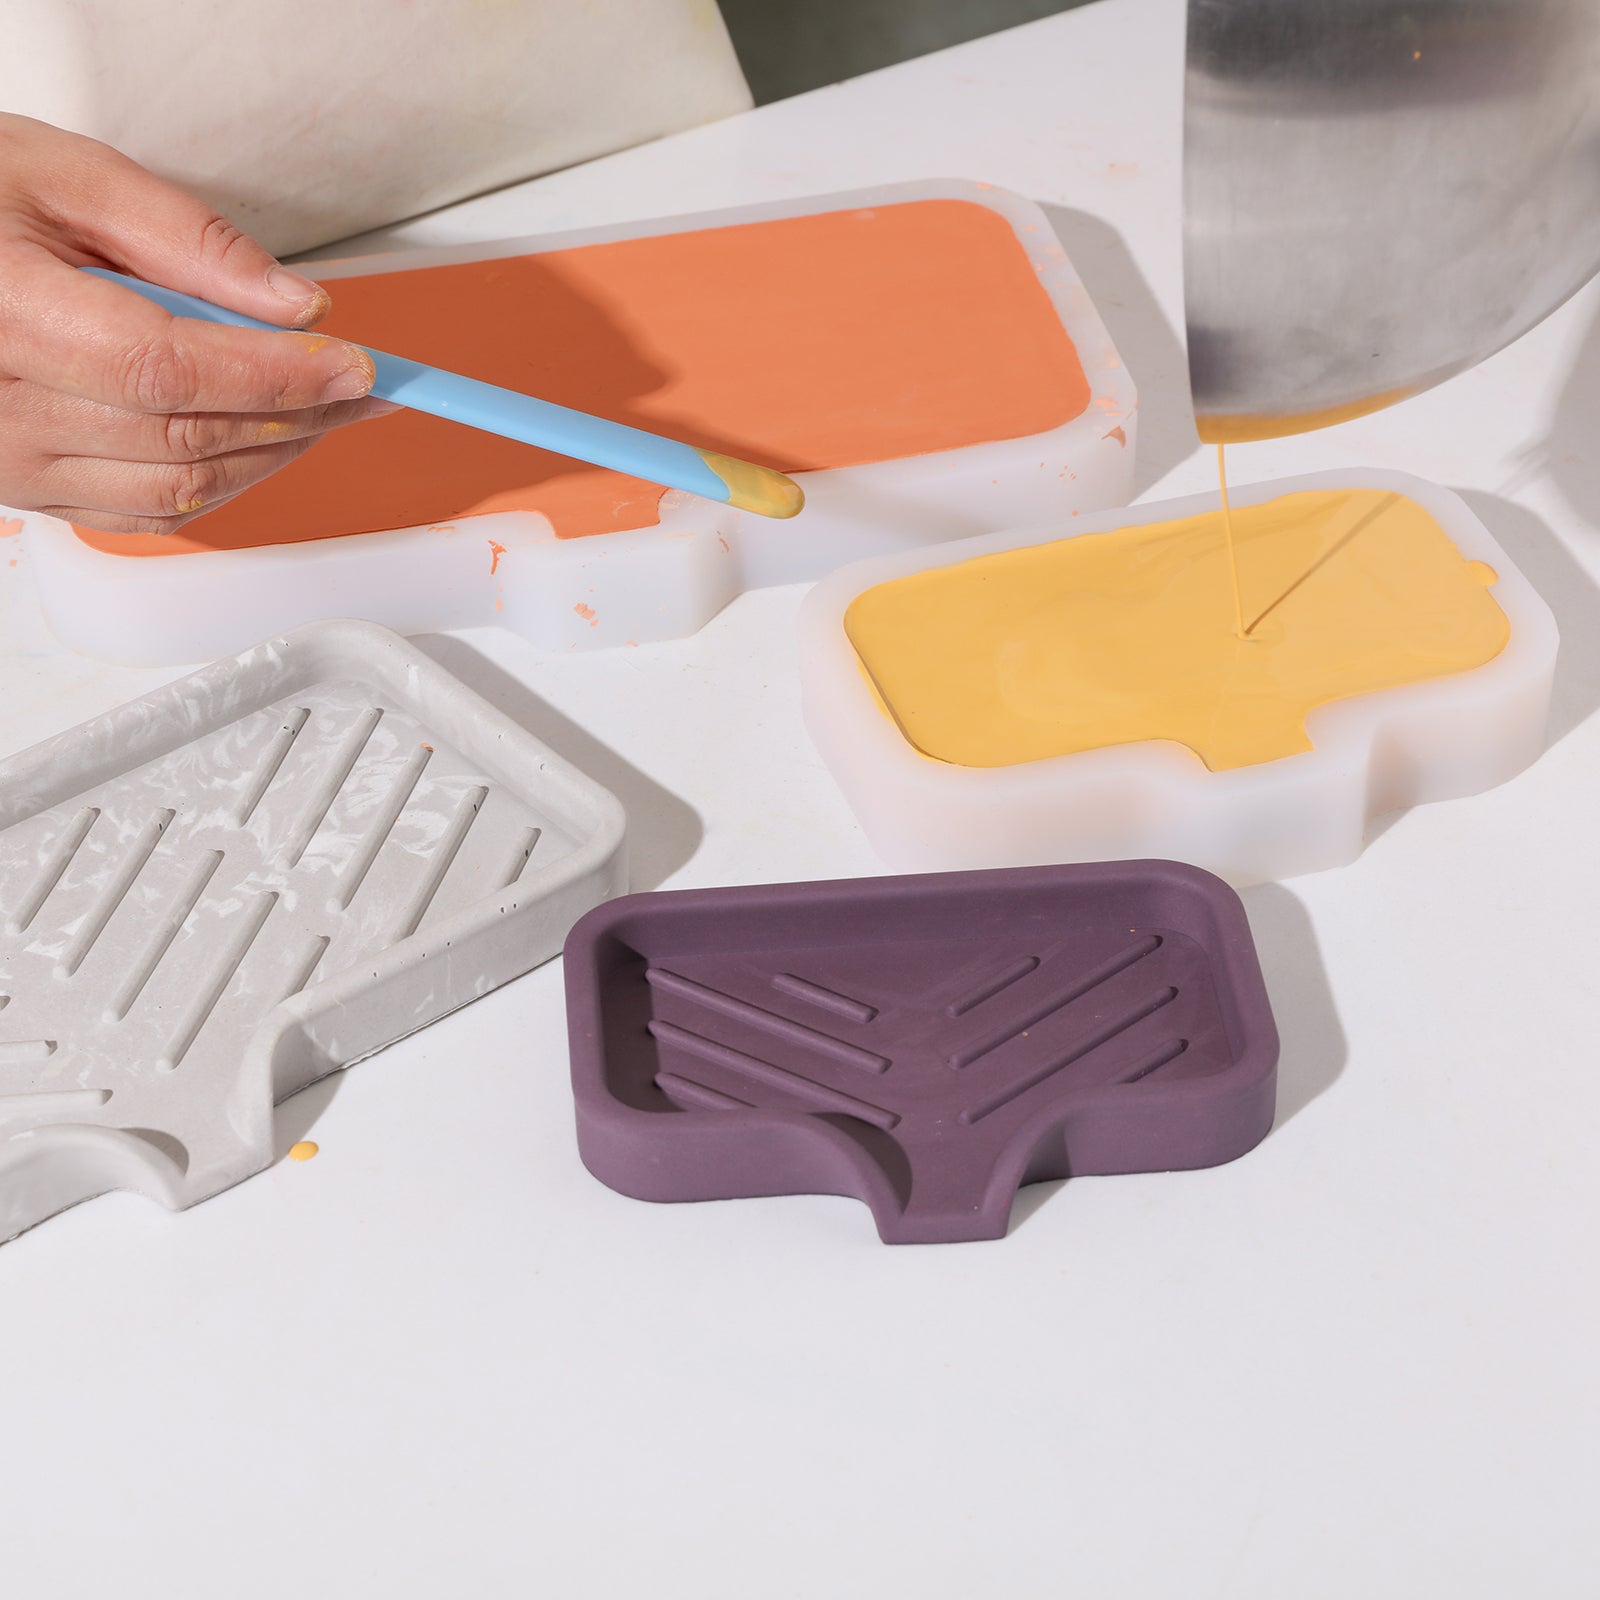 Concrete Soap Dish - Draining Soap Holder - Bathroom Accessories